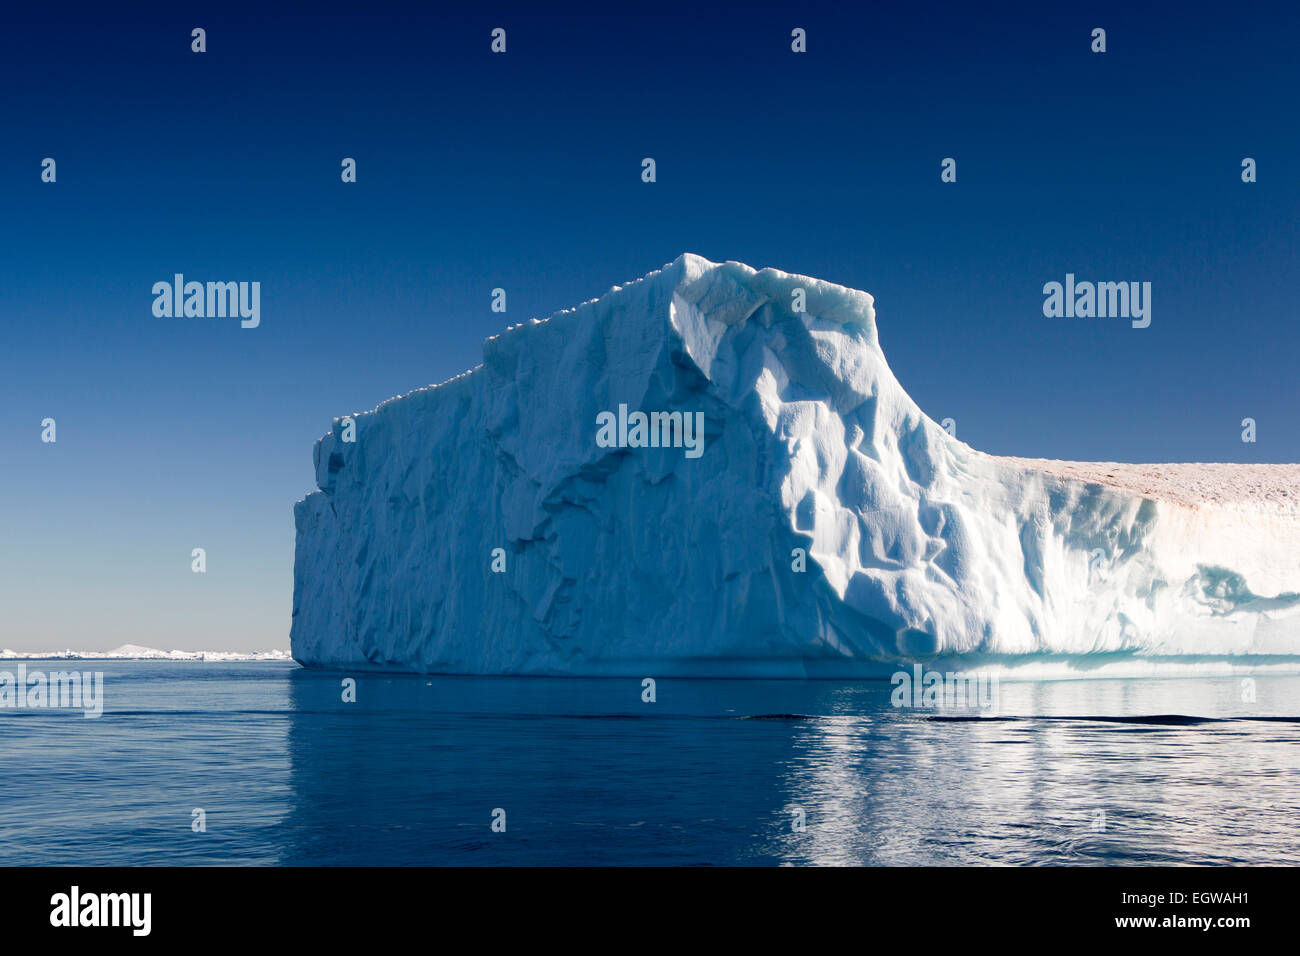 Antarctica, Weddell Sea, large Antarctic tabular iceberg towering high above sea Stock Photo